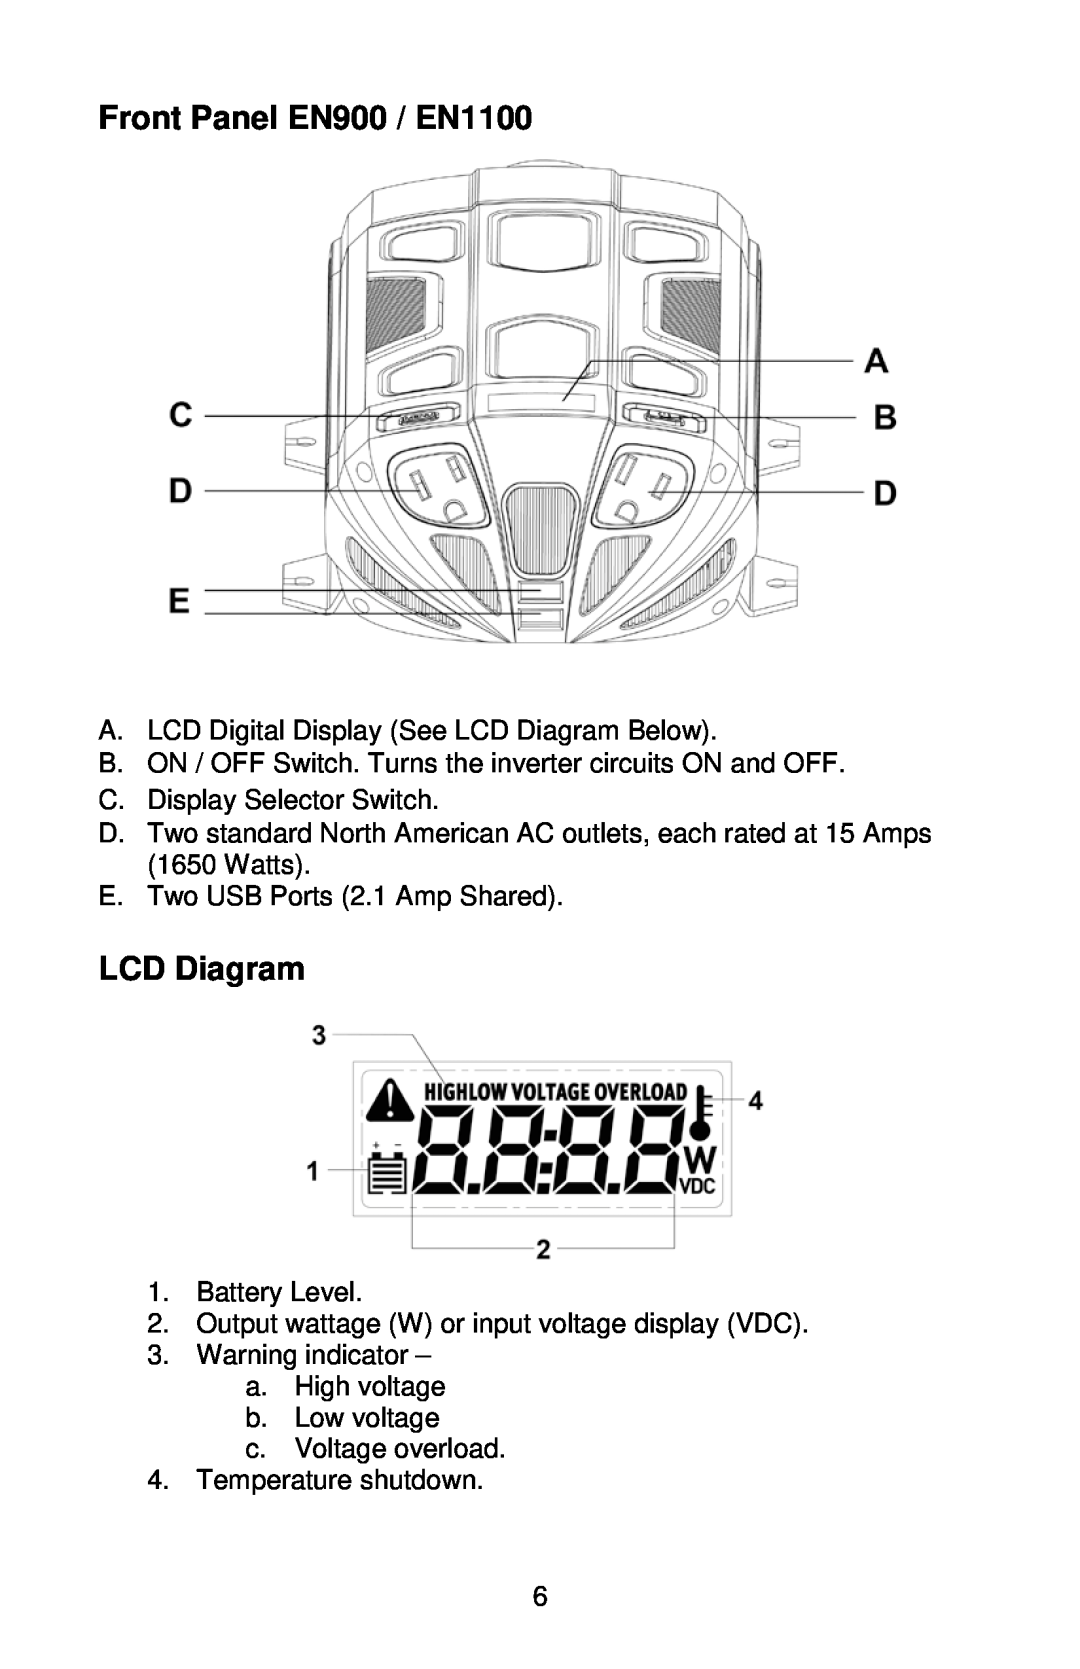 Energizer manual Front Panel EN900 / EN1100, LCD Diagram 